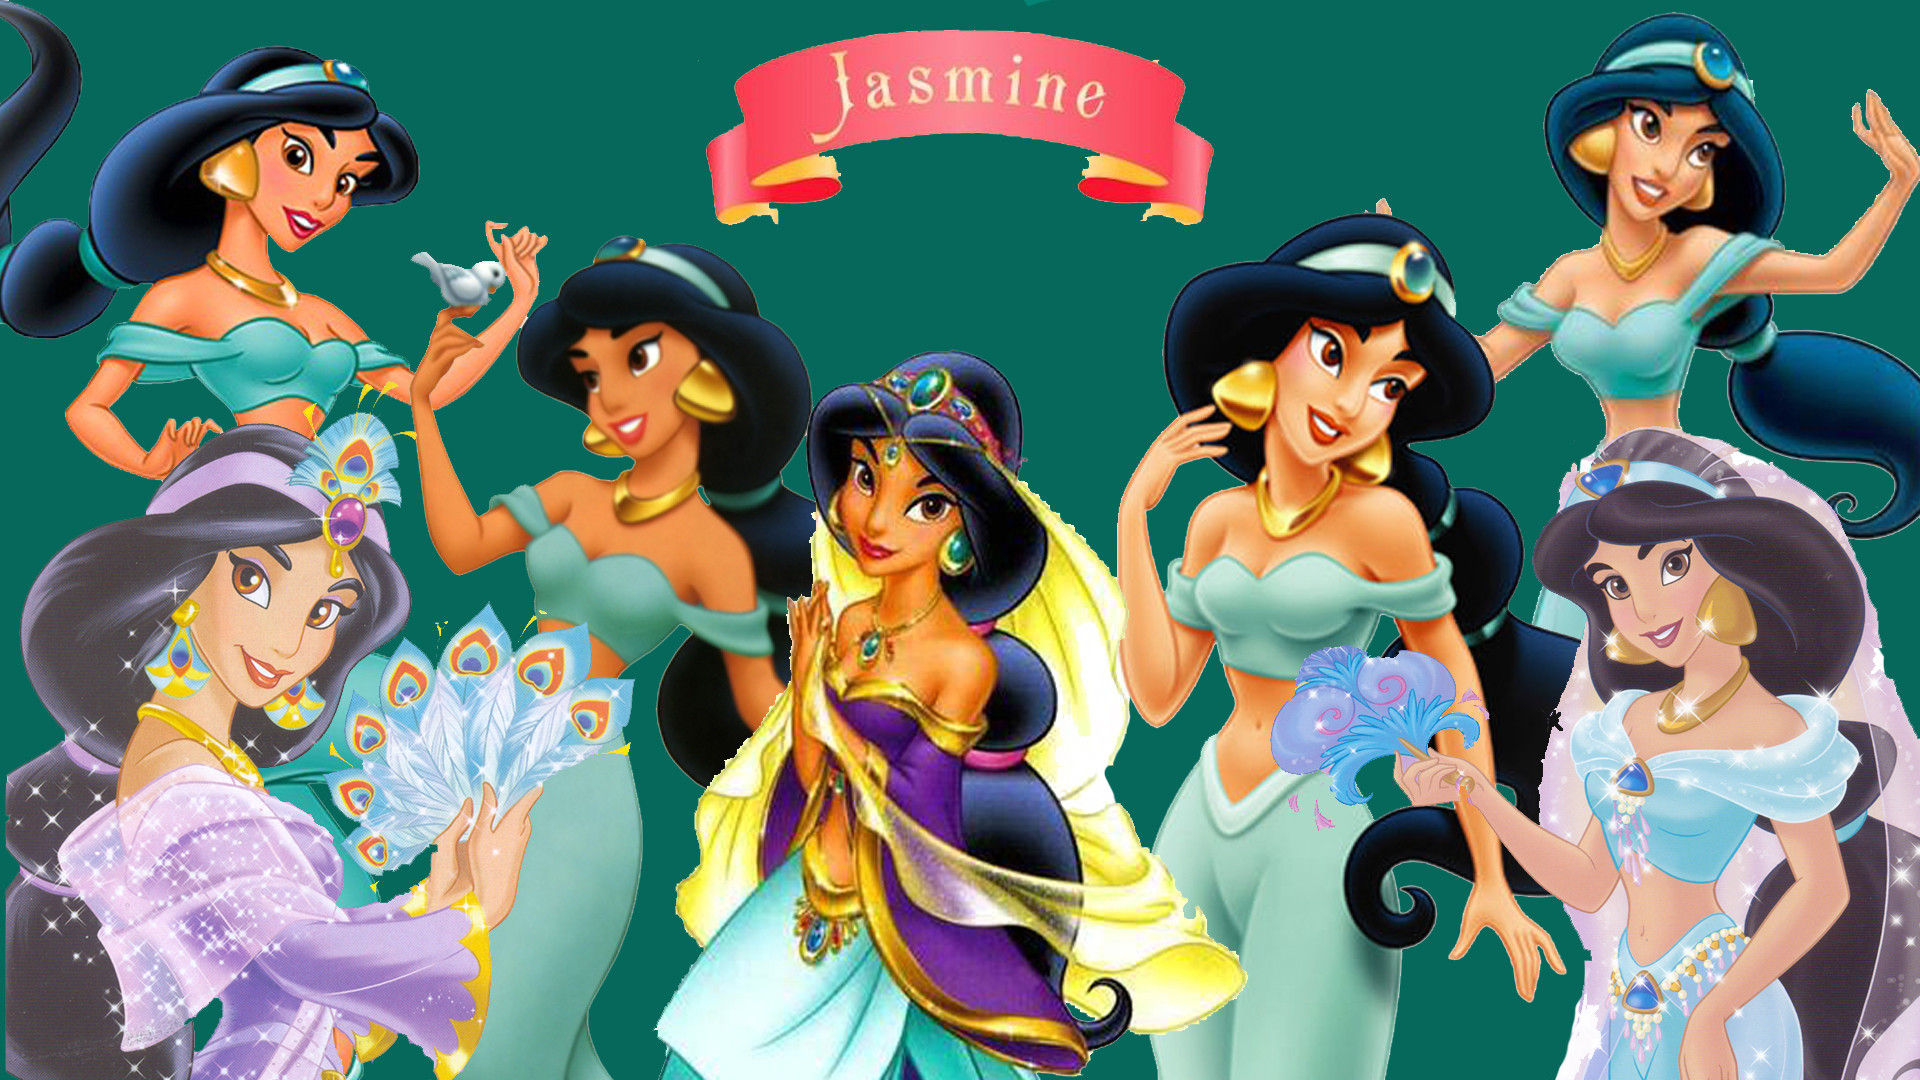 1920x1080 Jasmine-Disney-Jasmine-disney-princess-19029069-1920-1080.